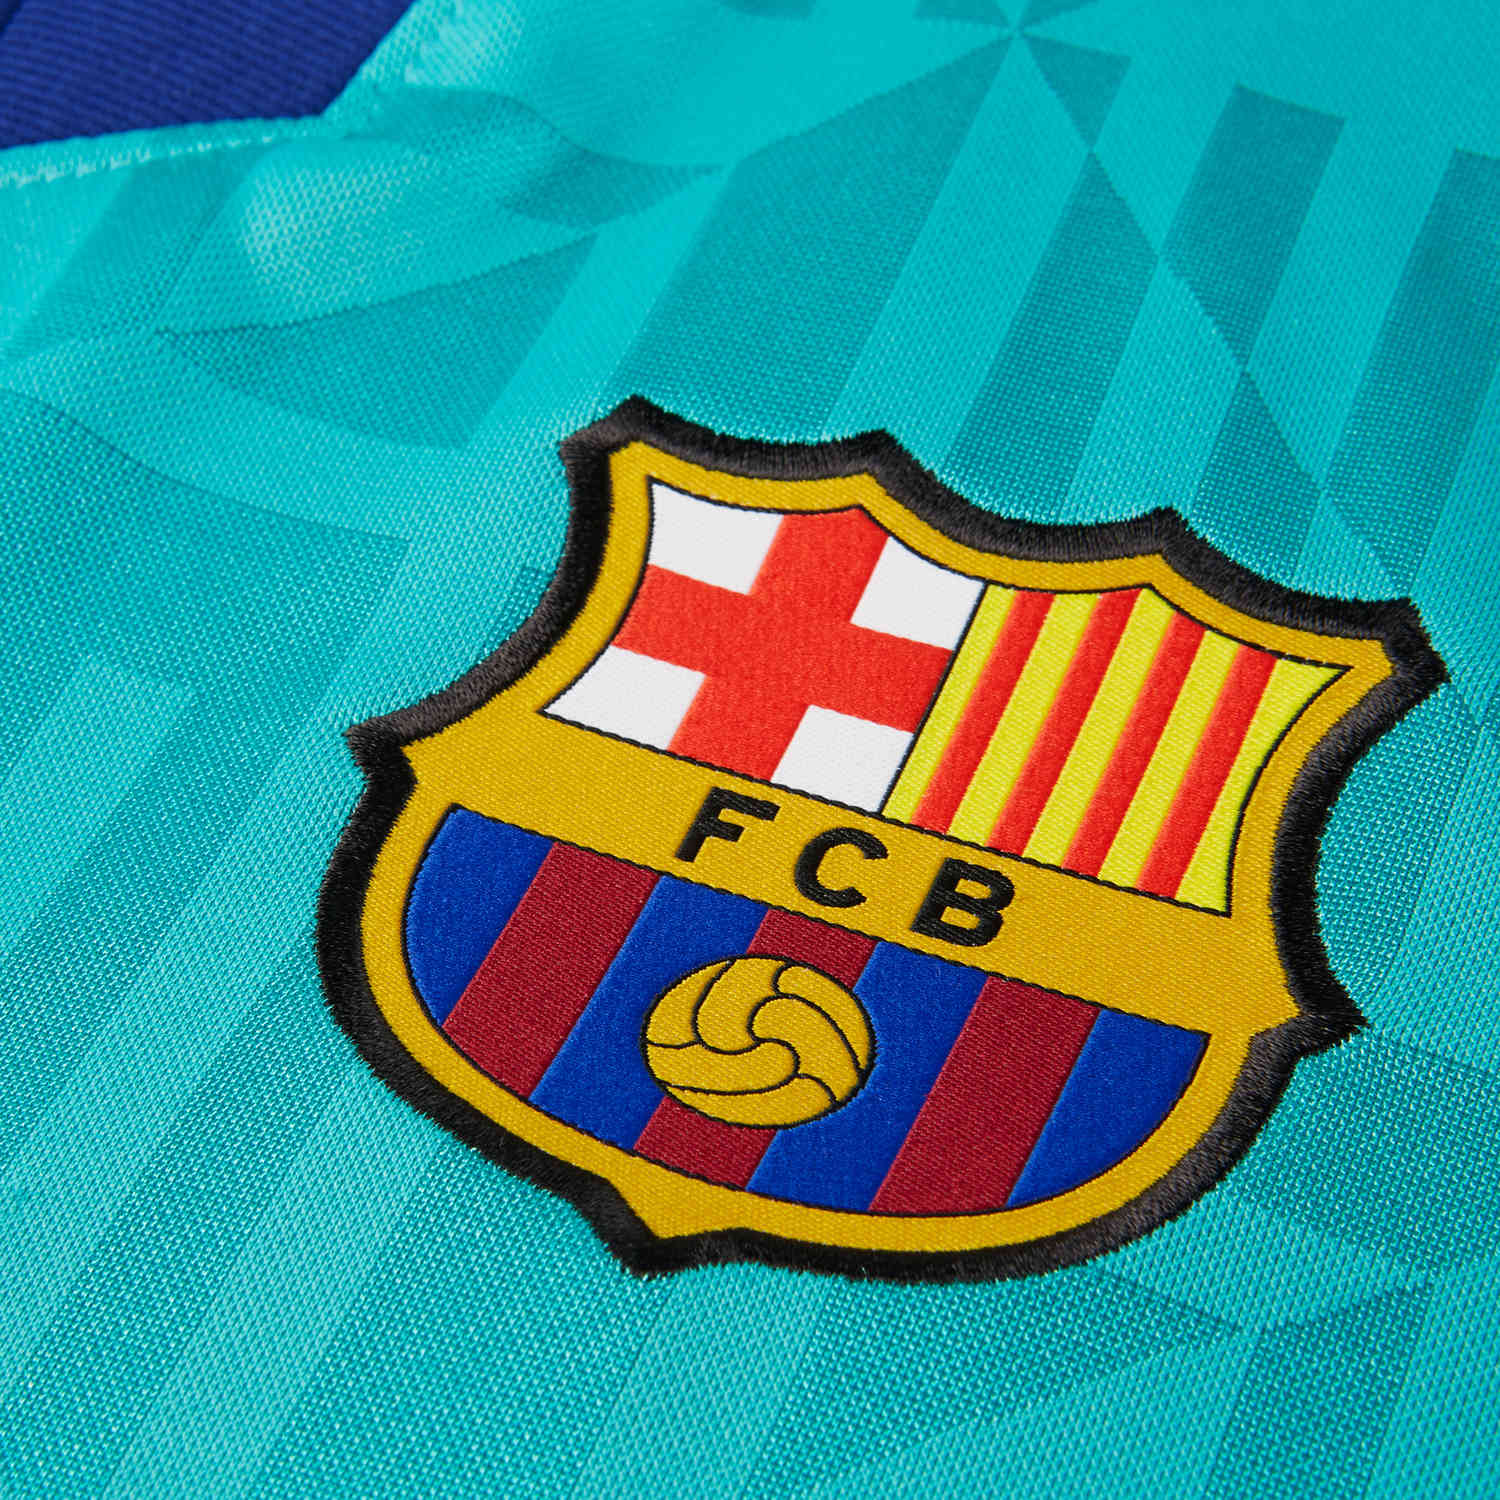 Nike FC Barcelona Mens Third Soccer Jersey- 2019/20